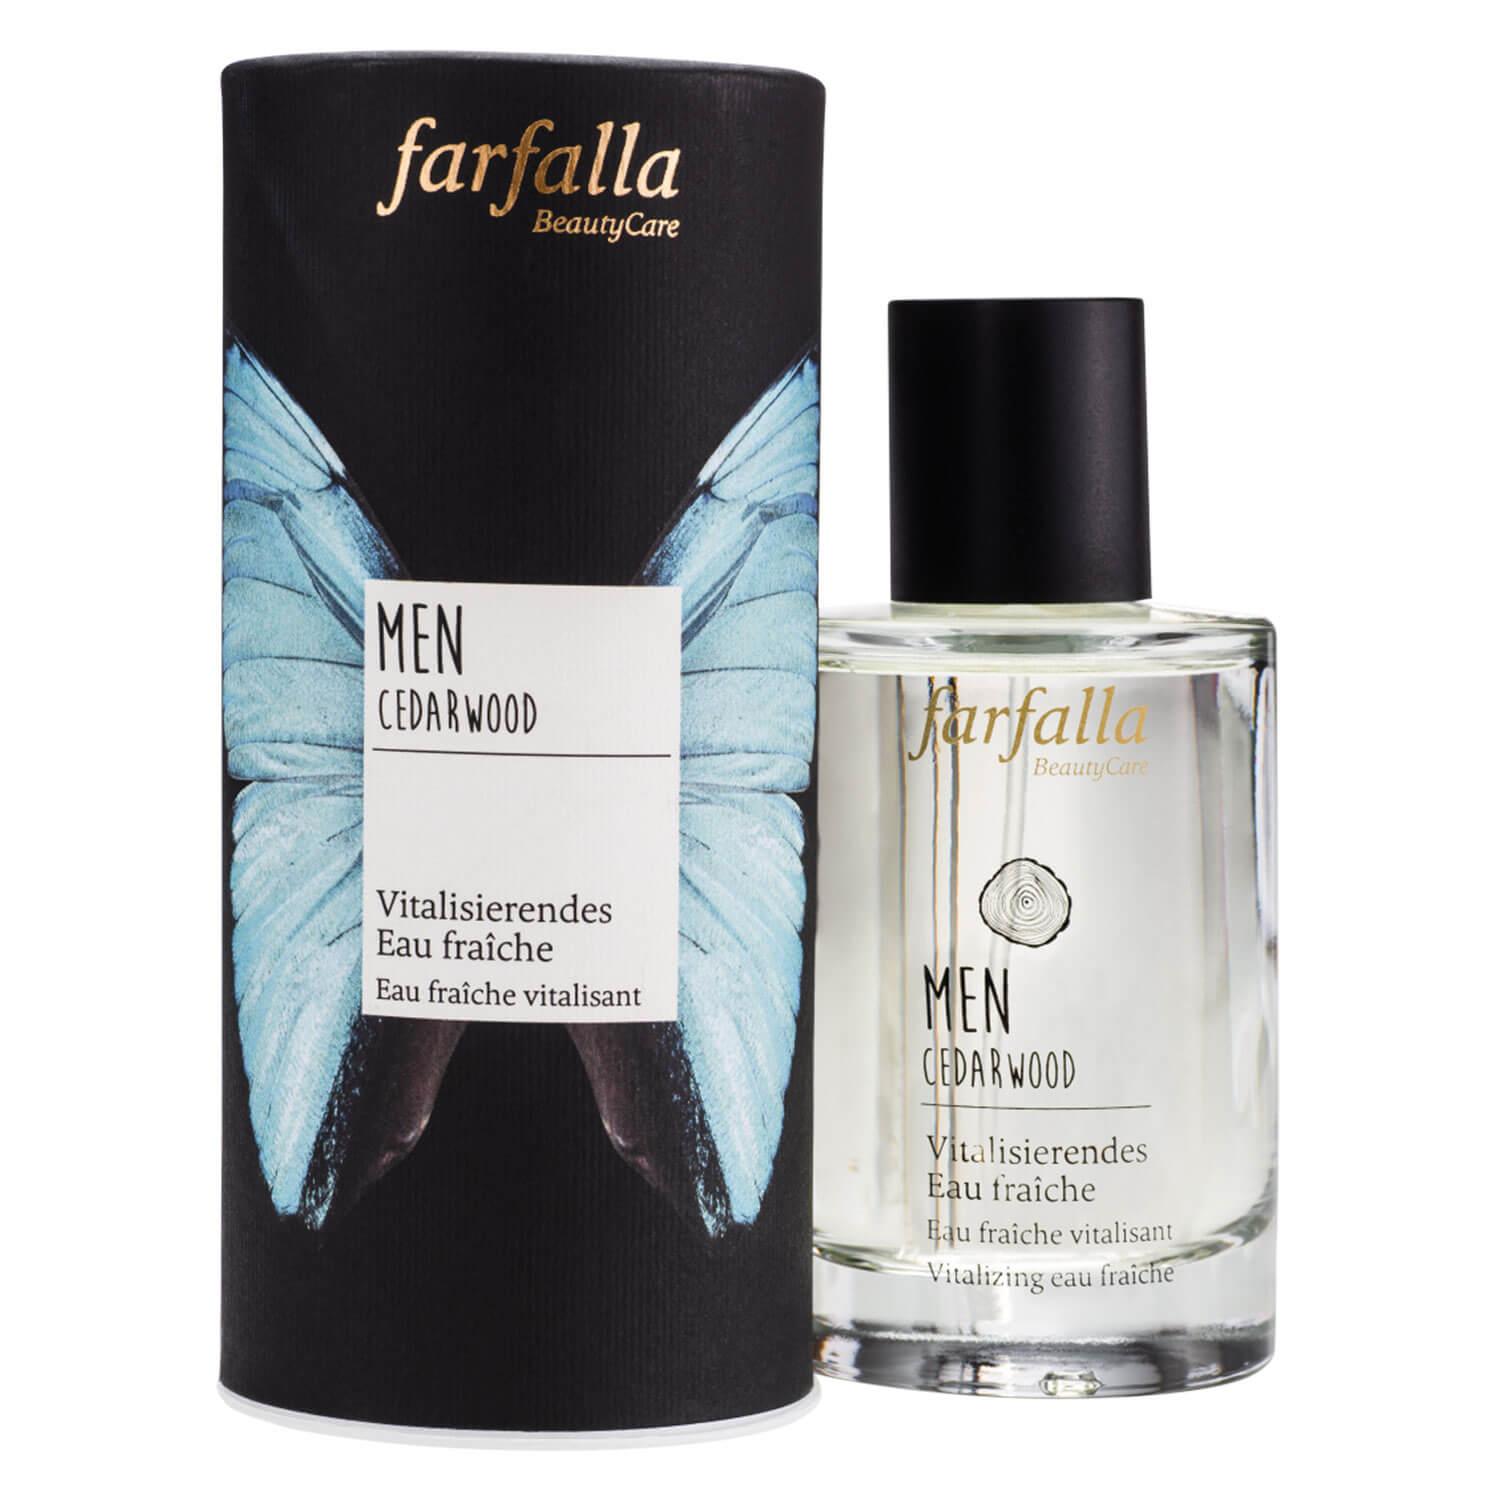 Farfalla Men - Cedarwood Vitalizing eau fraîche